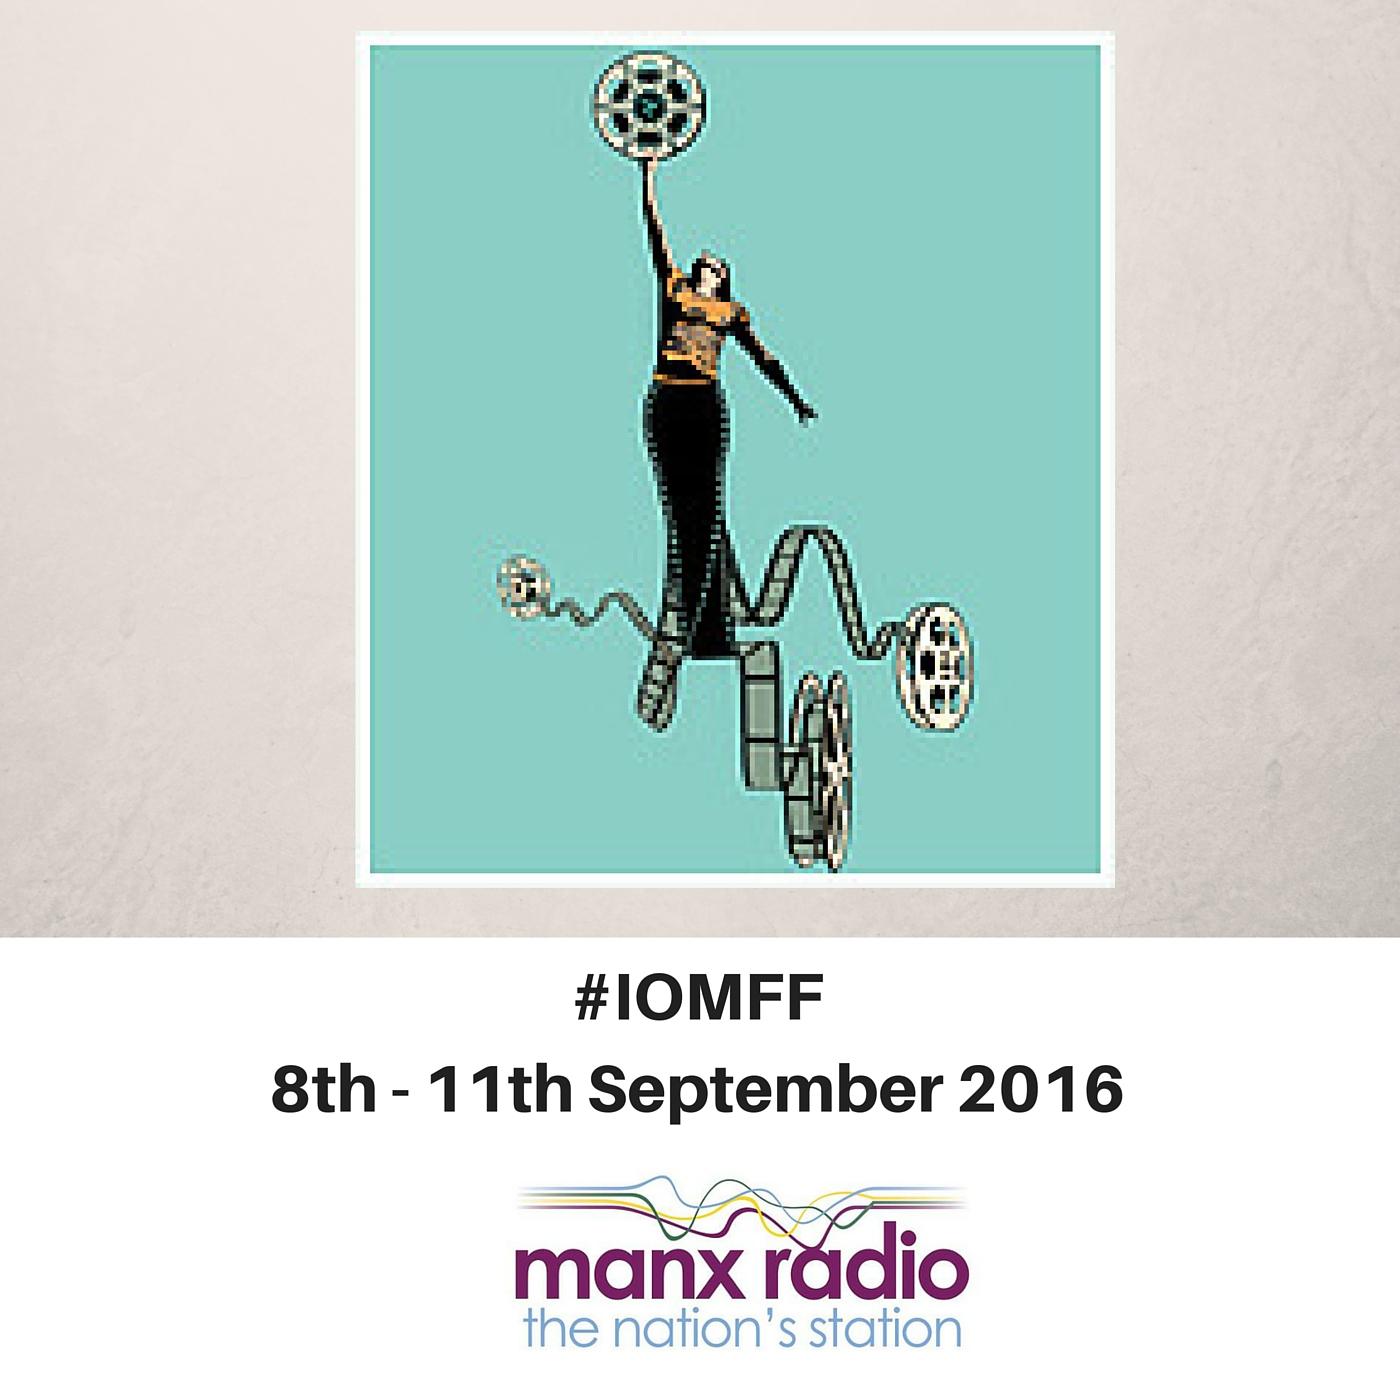 IOM Film Festival with Manx Radio